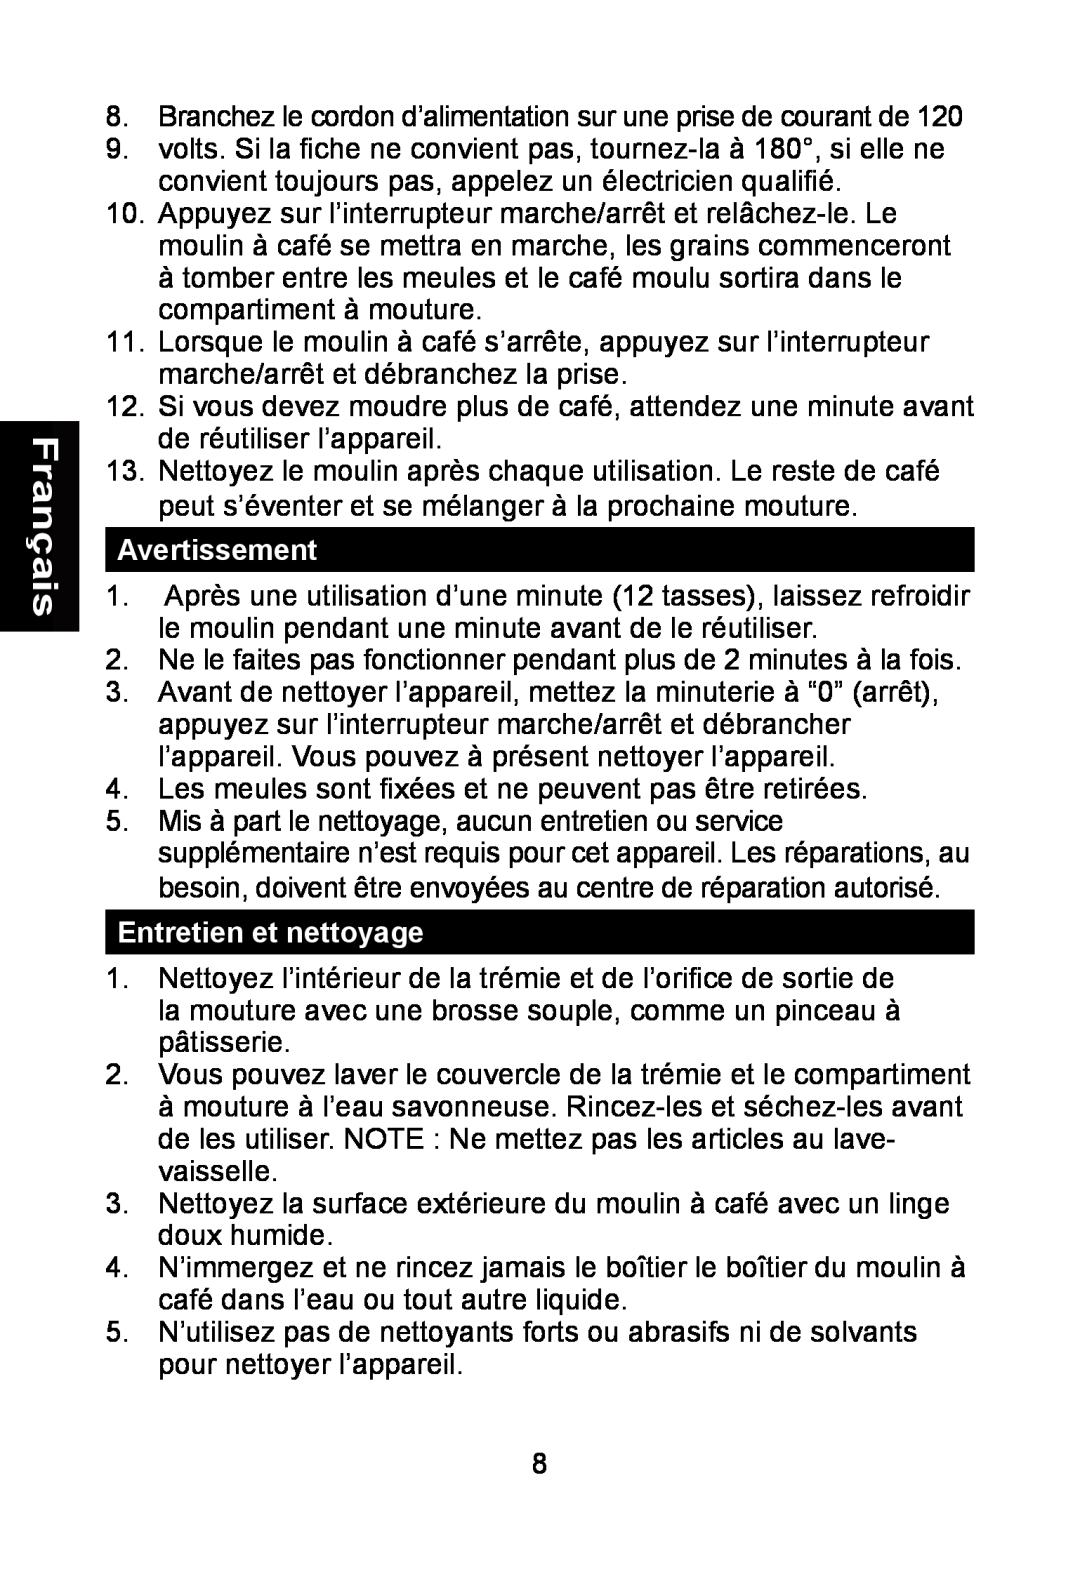 Nesco BG-88PR manual Avertissement, Entretien et nettoyage, Français 